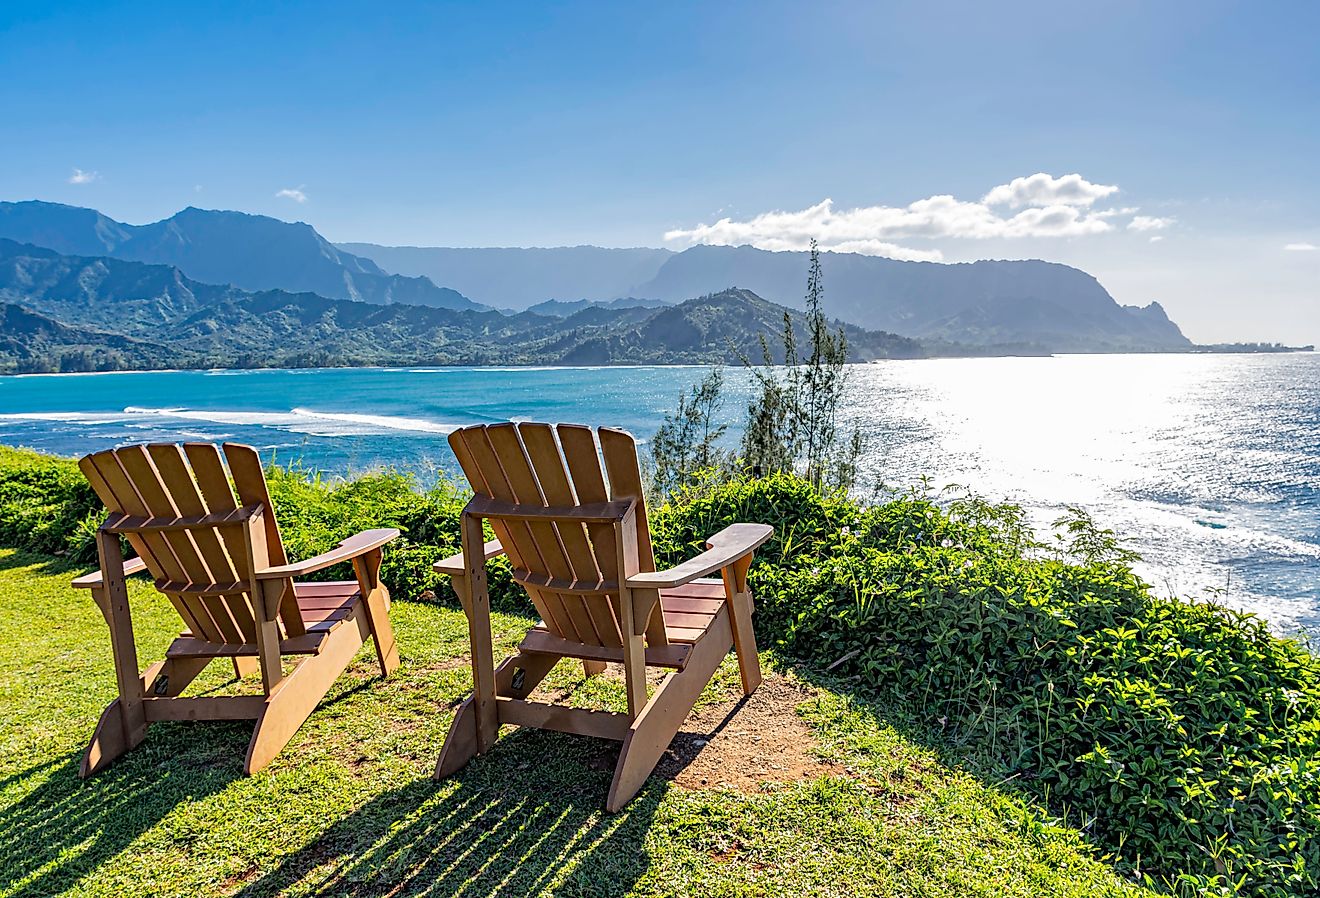  Lounge chairs overlooking Hanalei Bay and the Na Pali coast Princeville Kauai Hawaii USA in the late afternoon sun